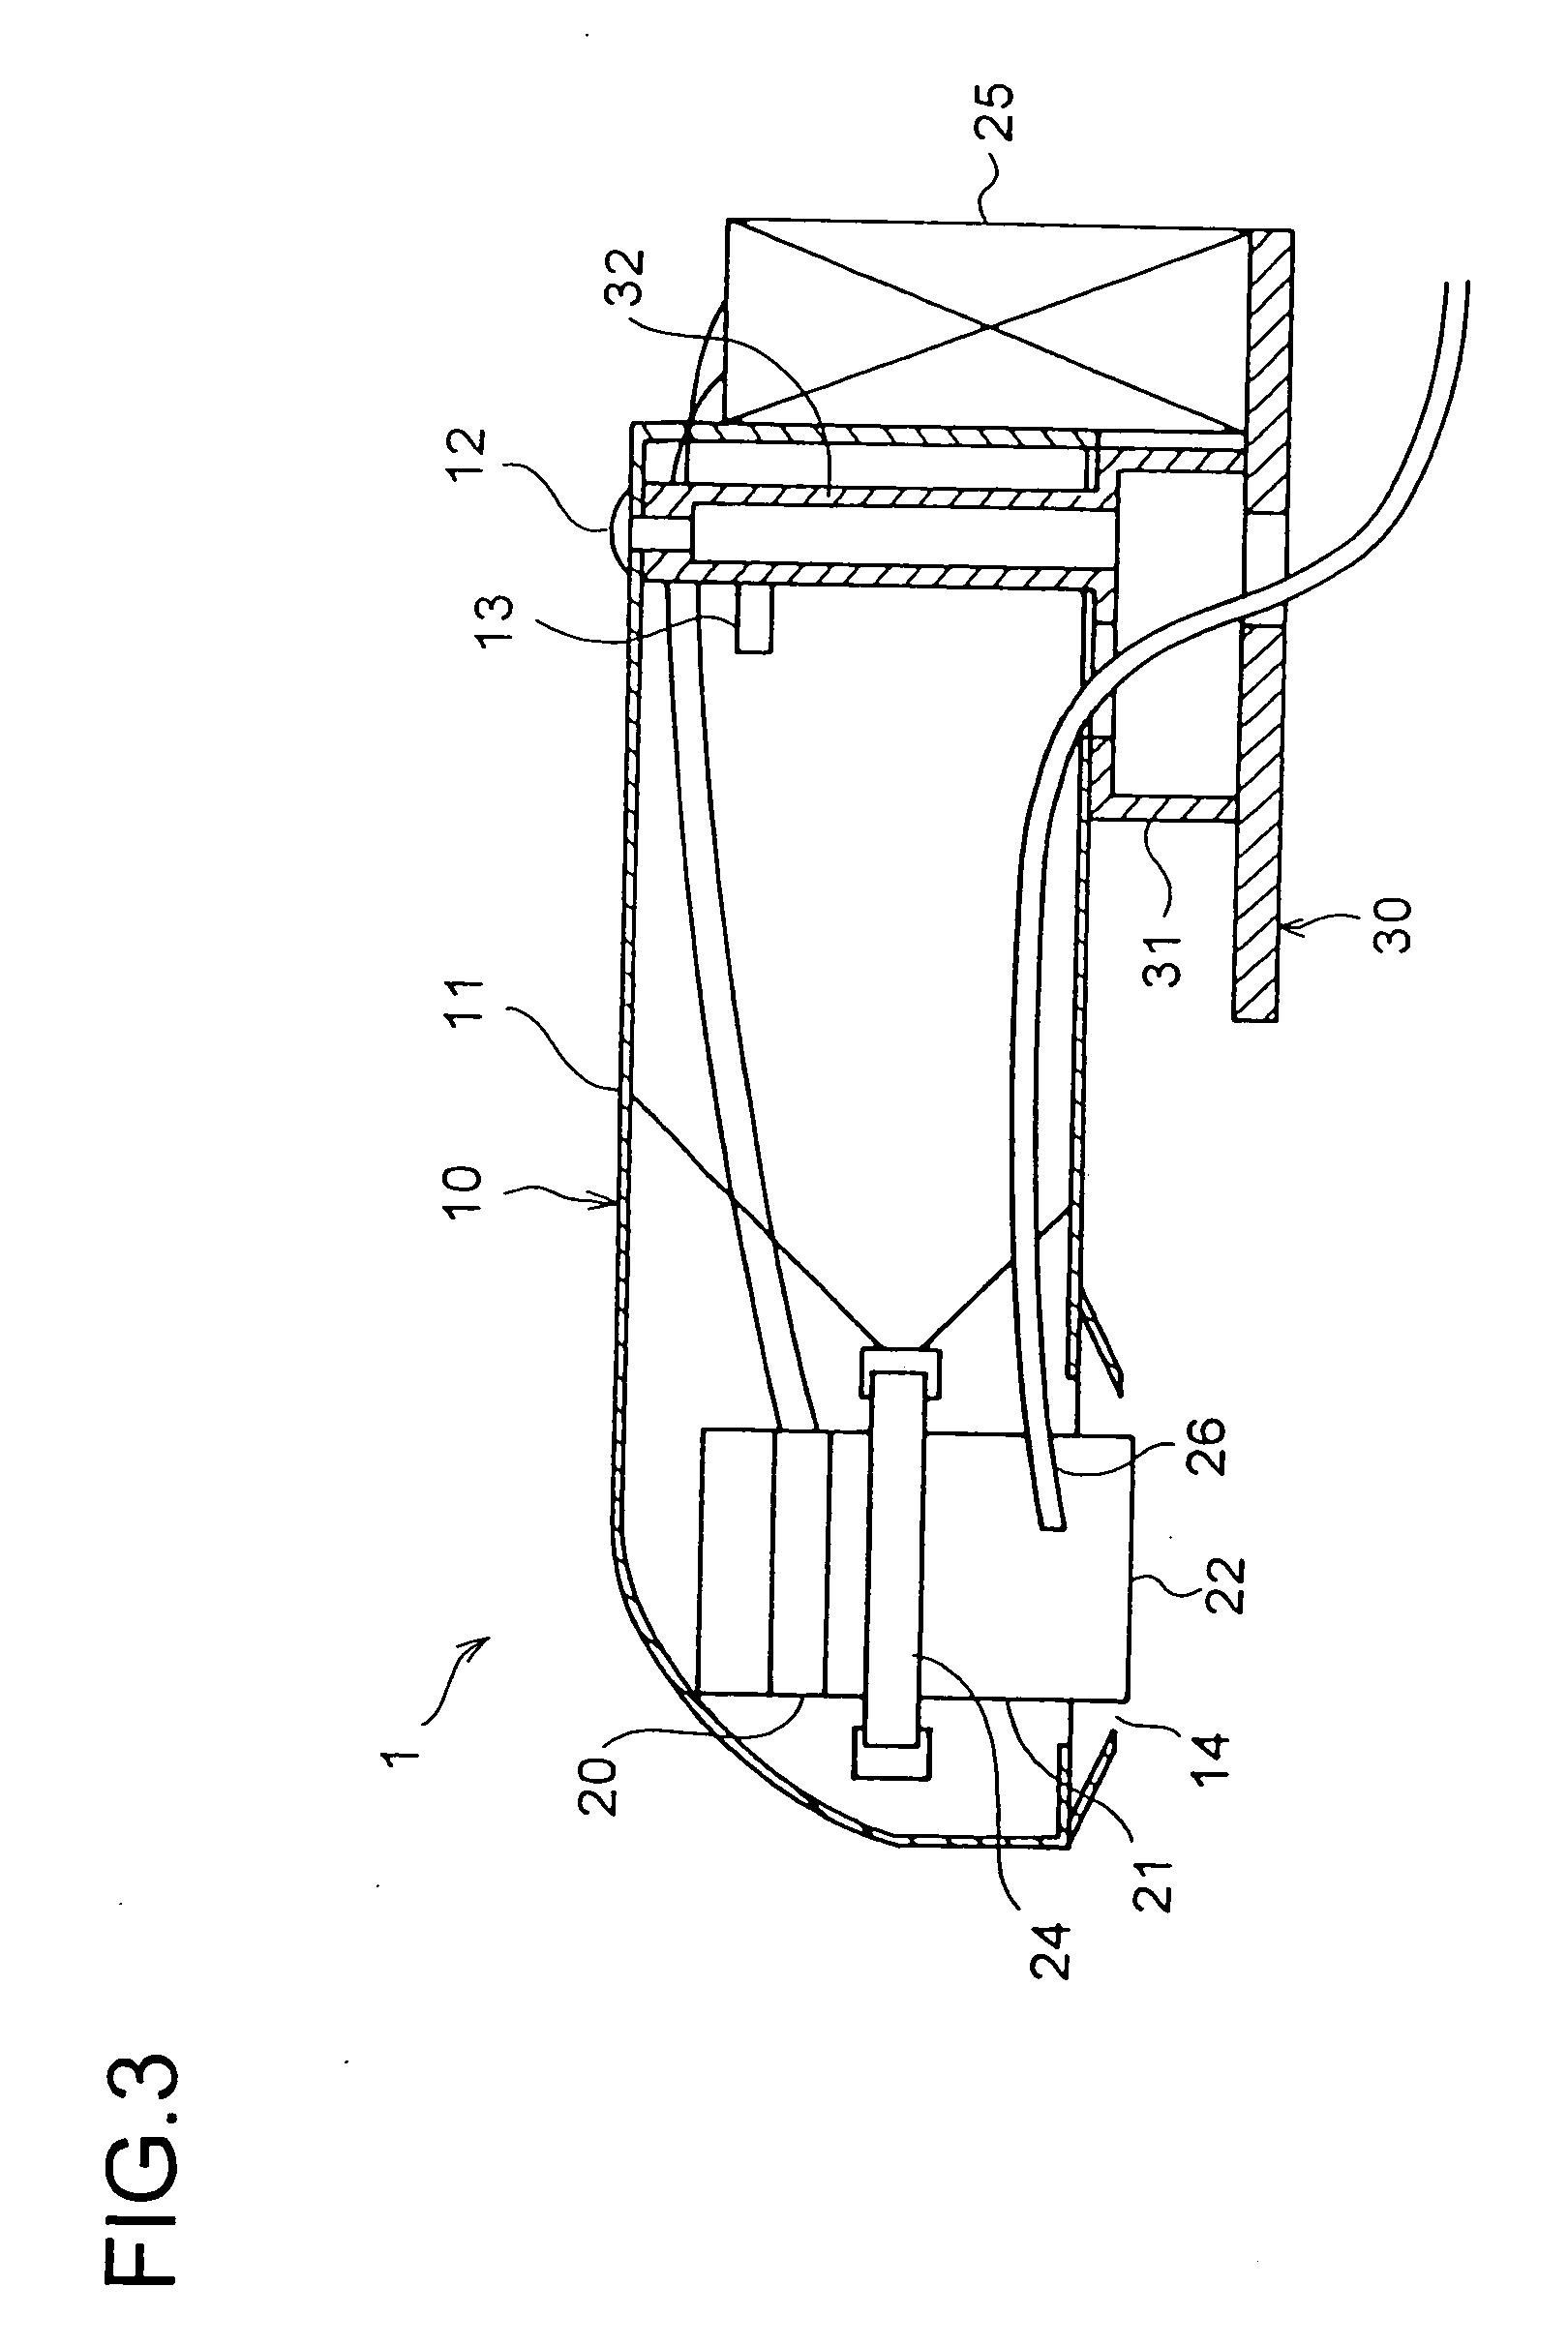 Ultrasonic washing apparatus